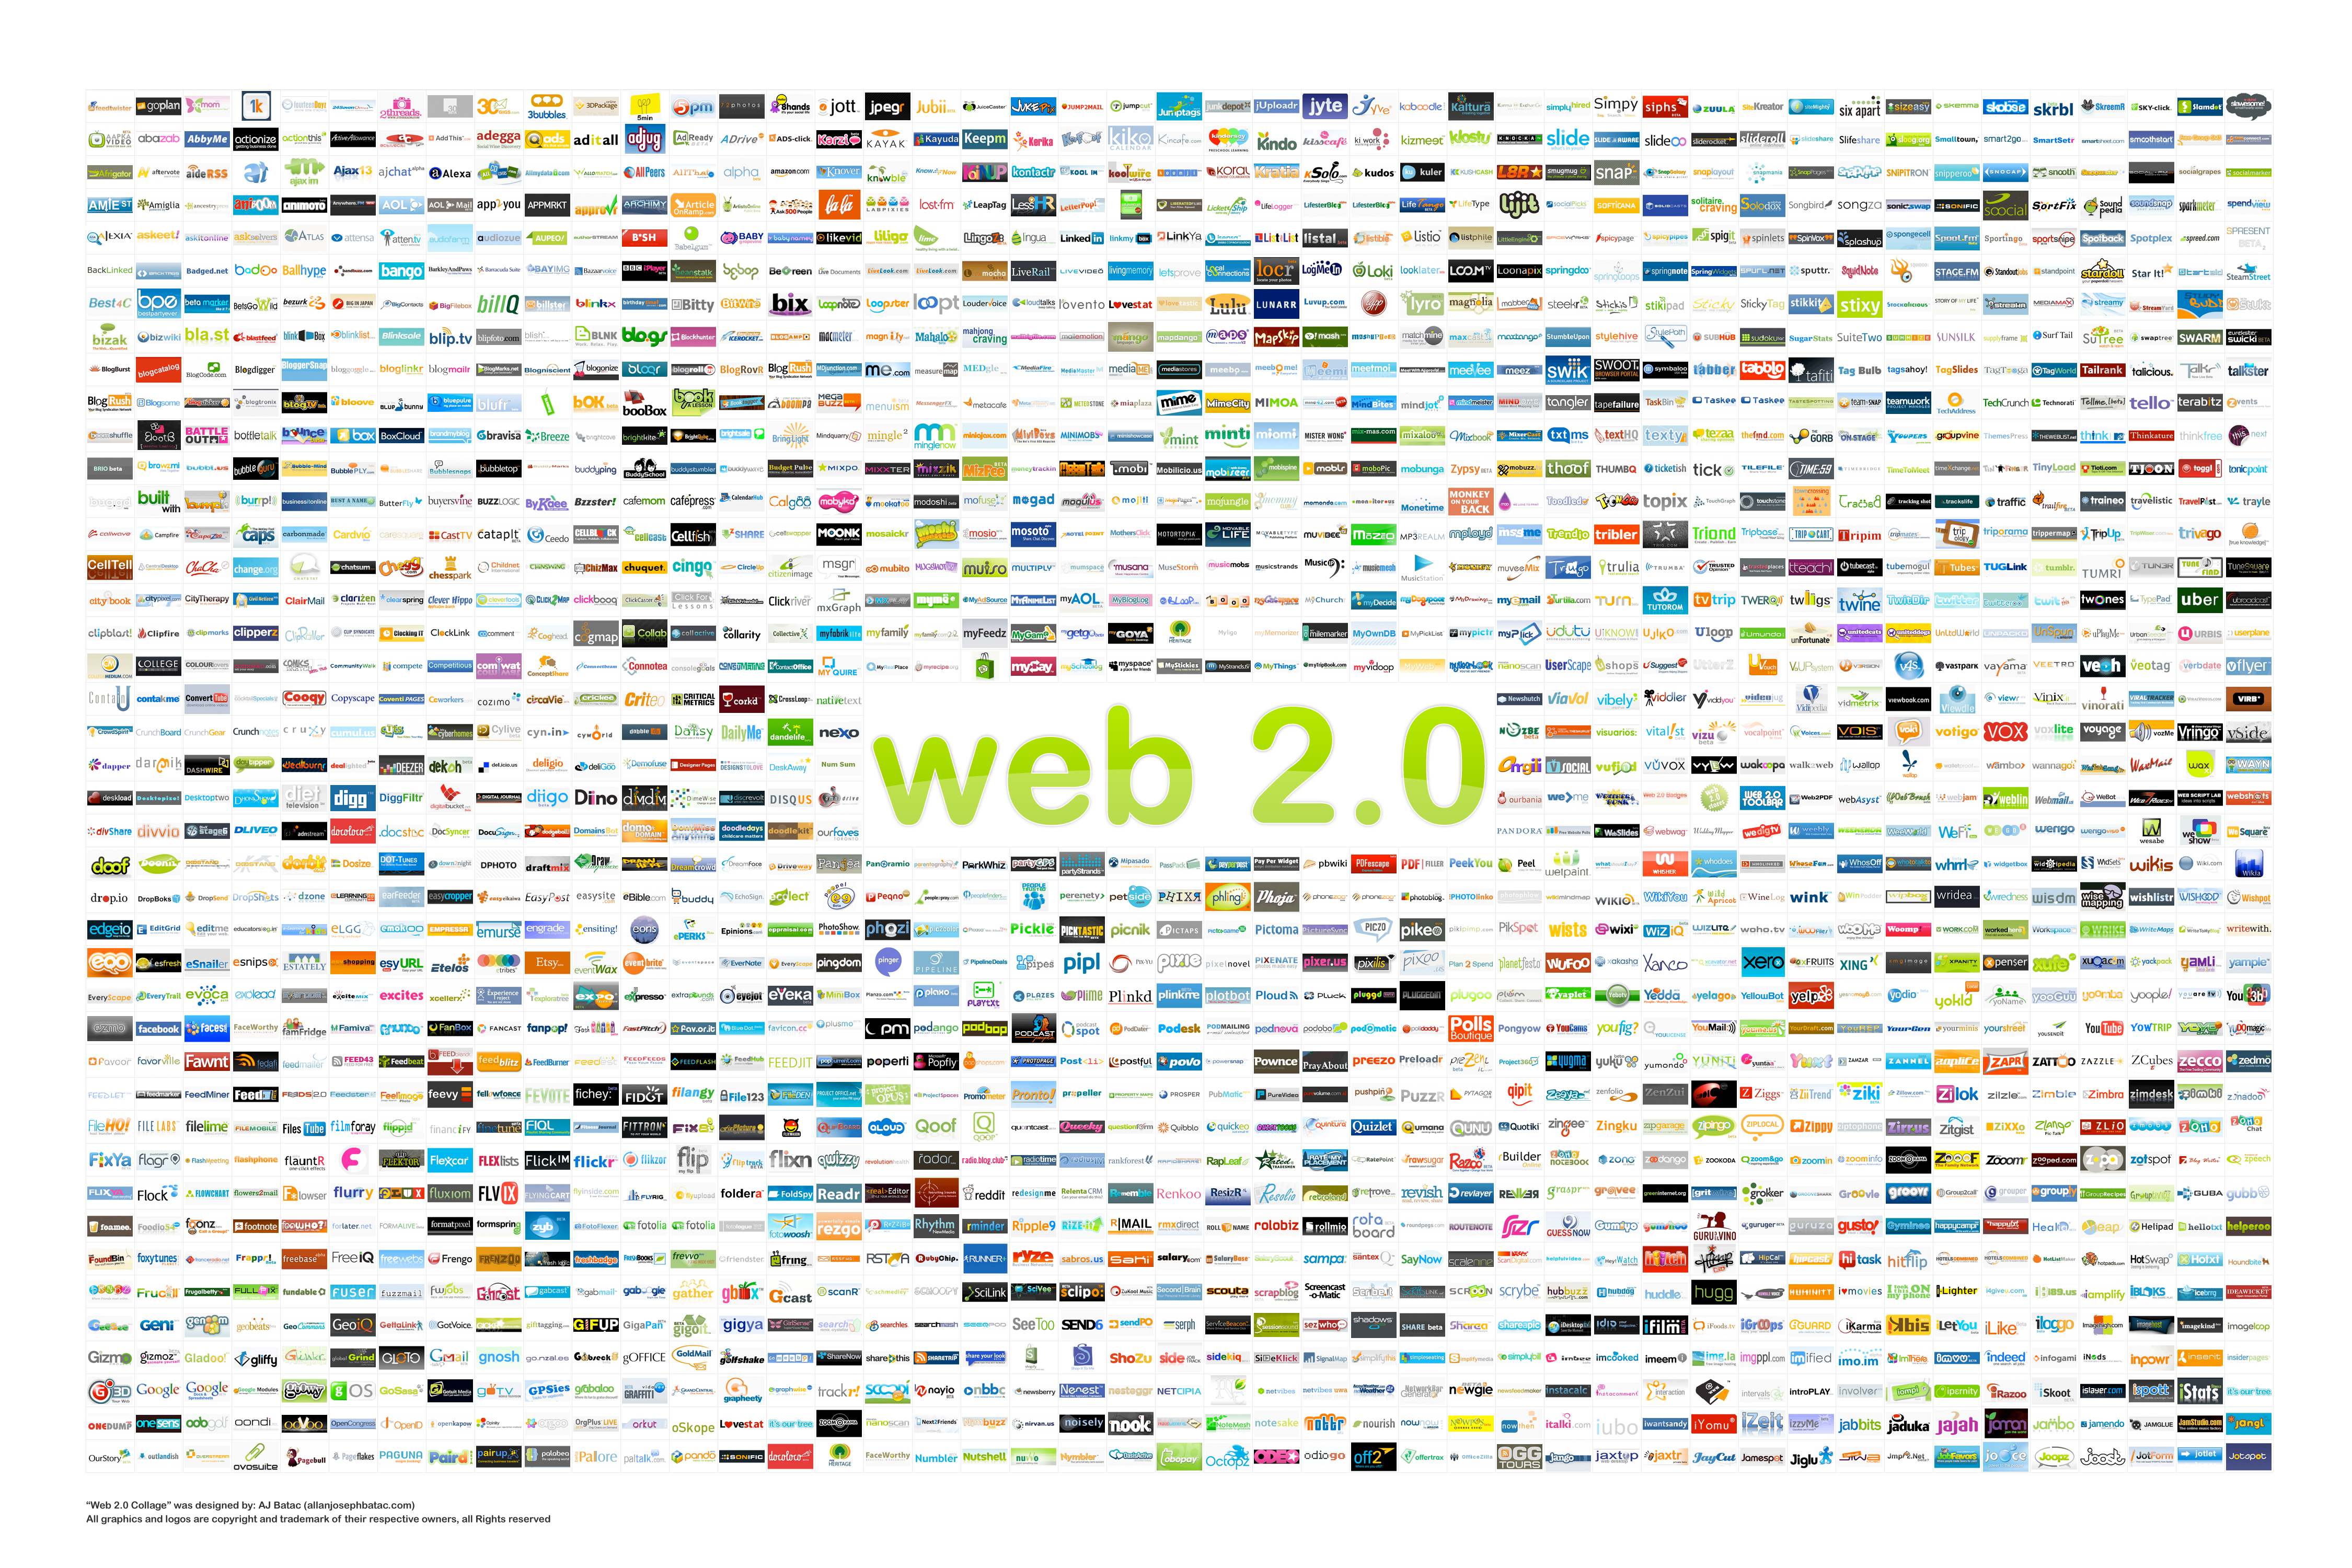 A diagram of Web 2.0 ideas